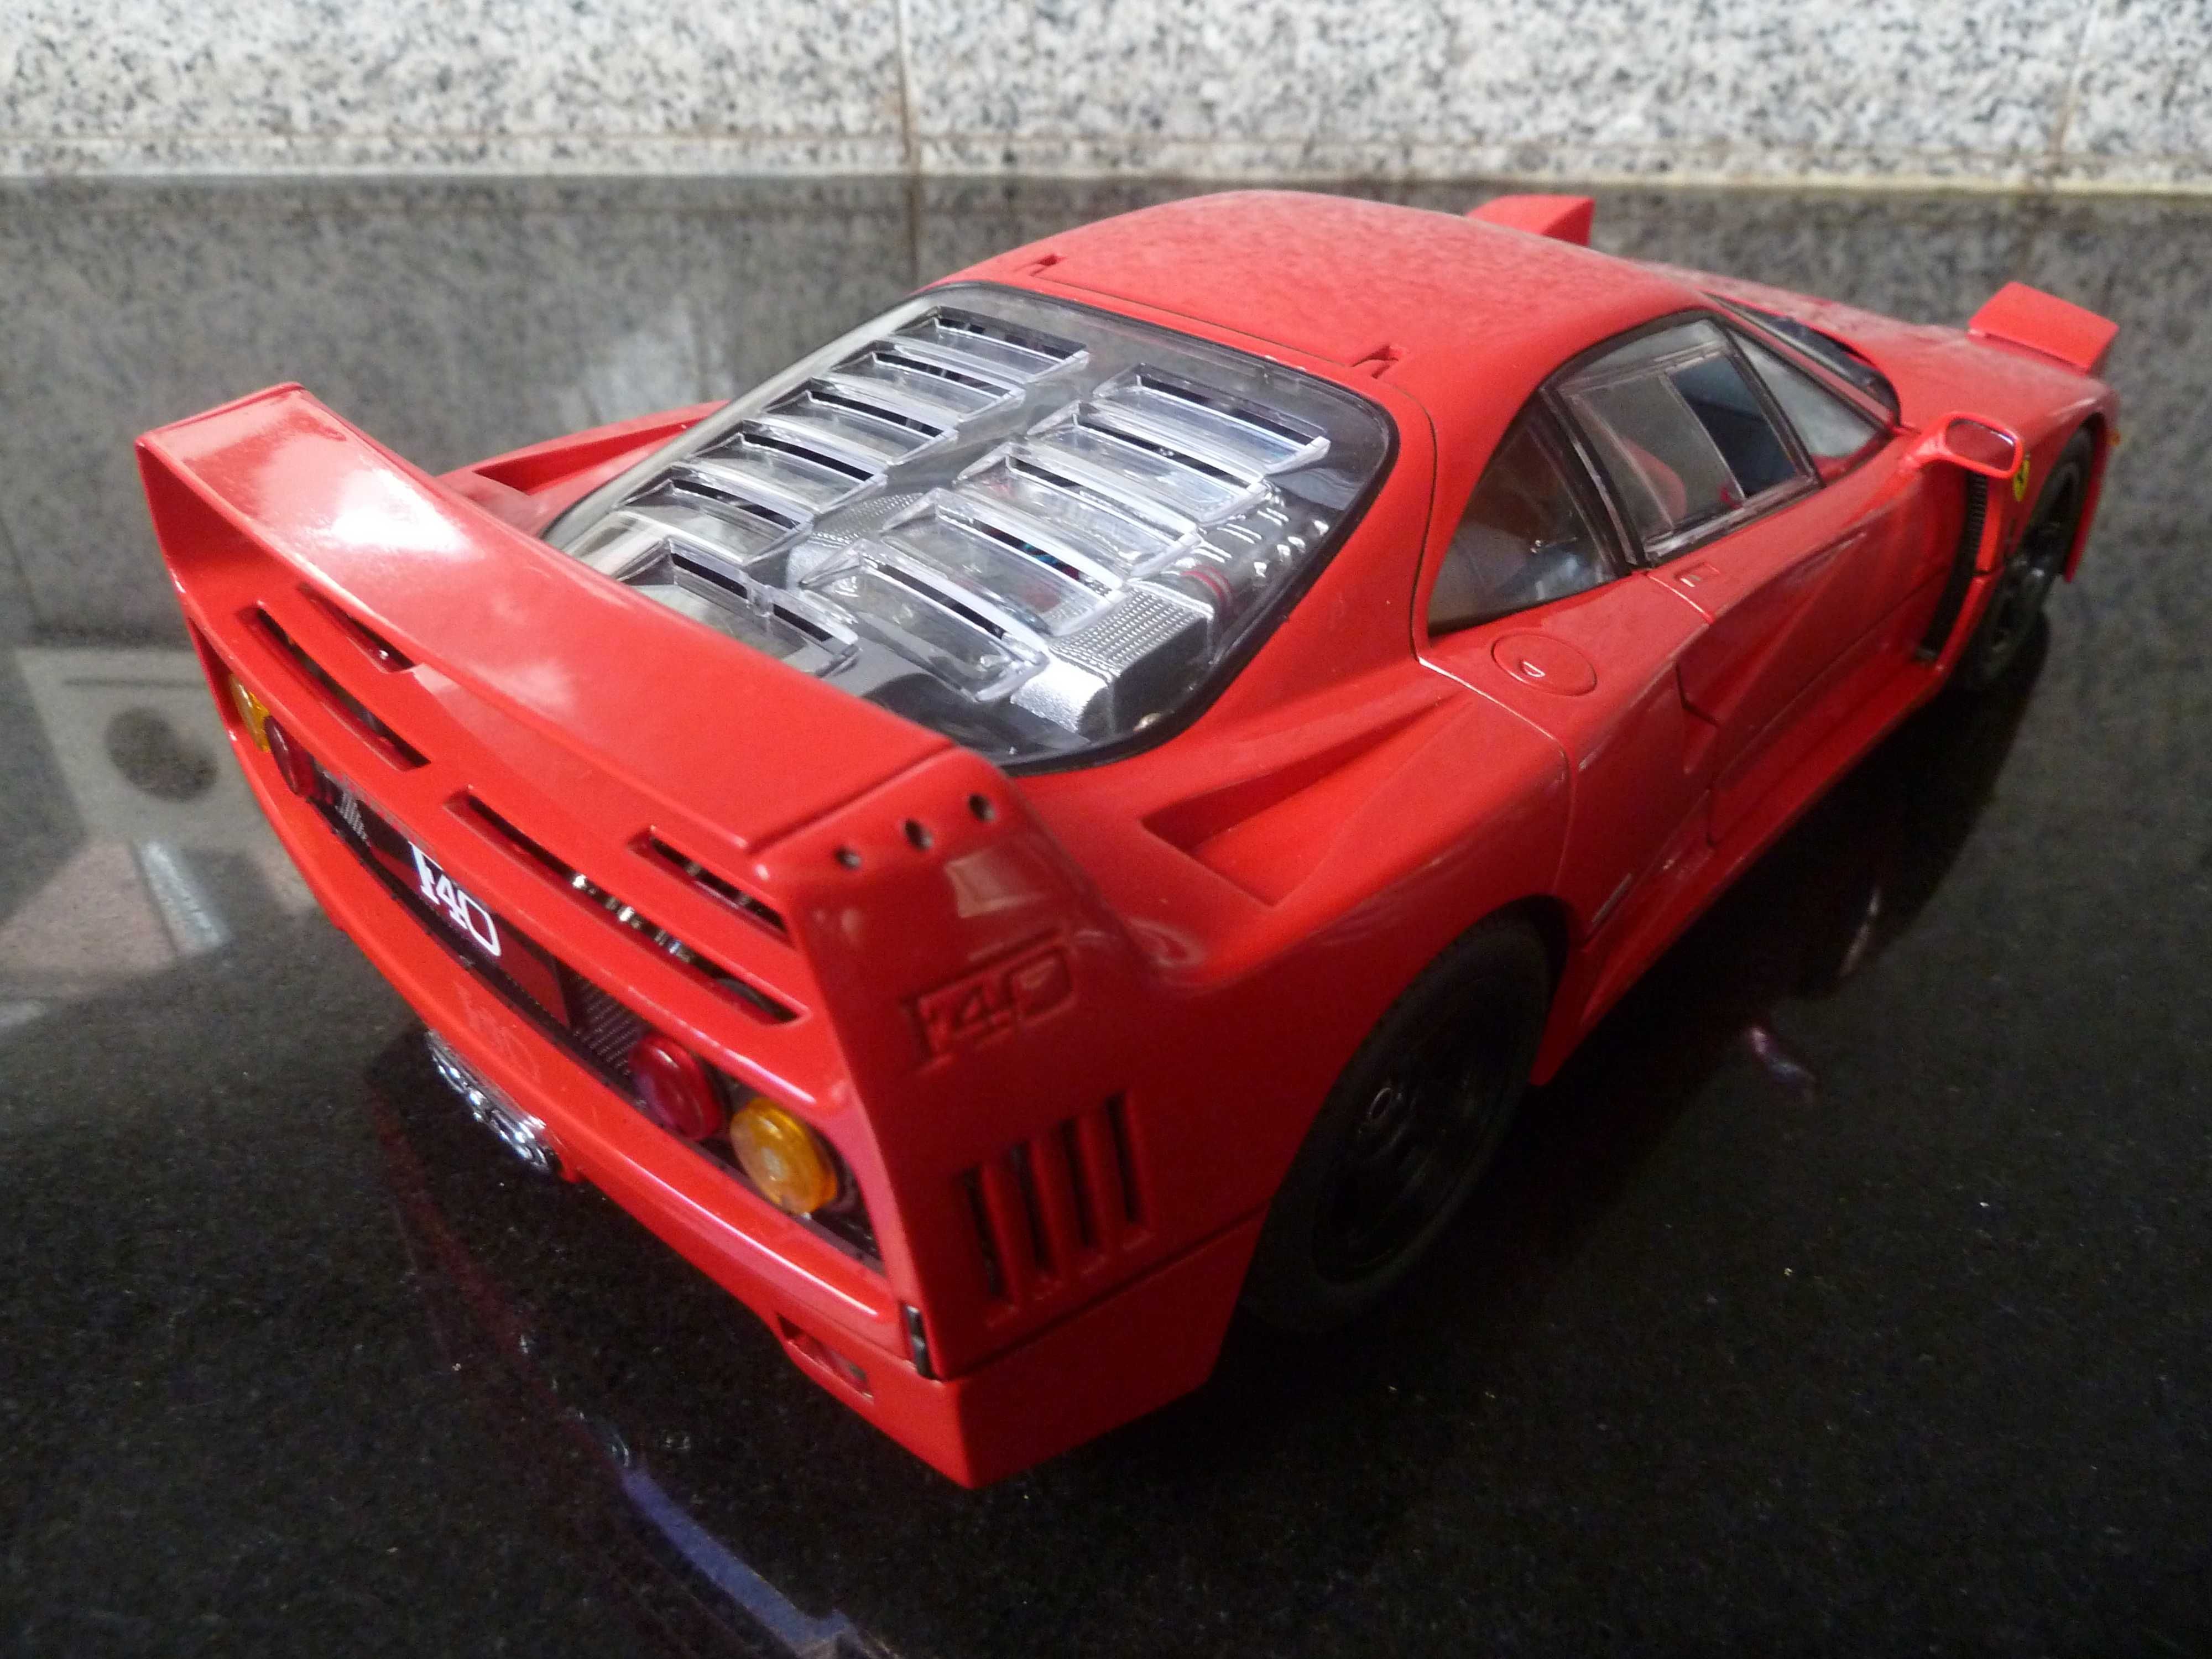 1:18 Kyosho, Ferrari F40 Light Weight, AutoArt, Minichamps